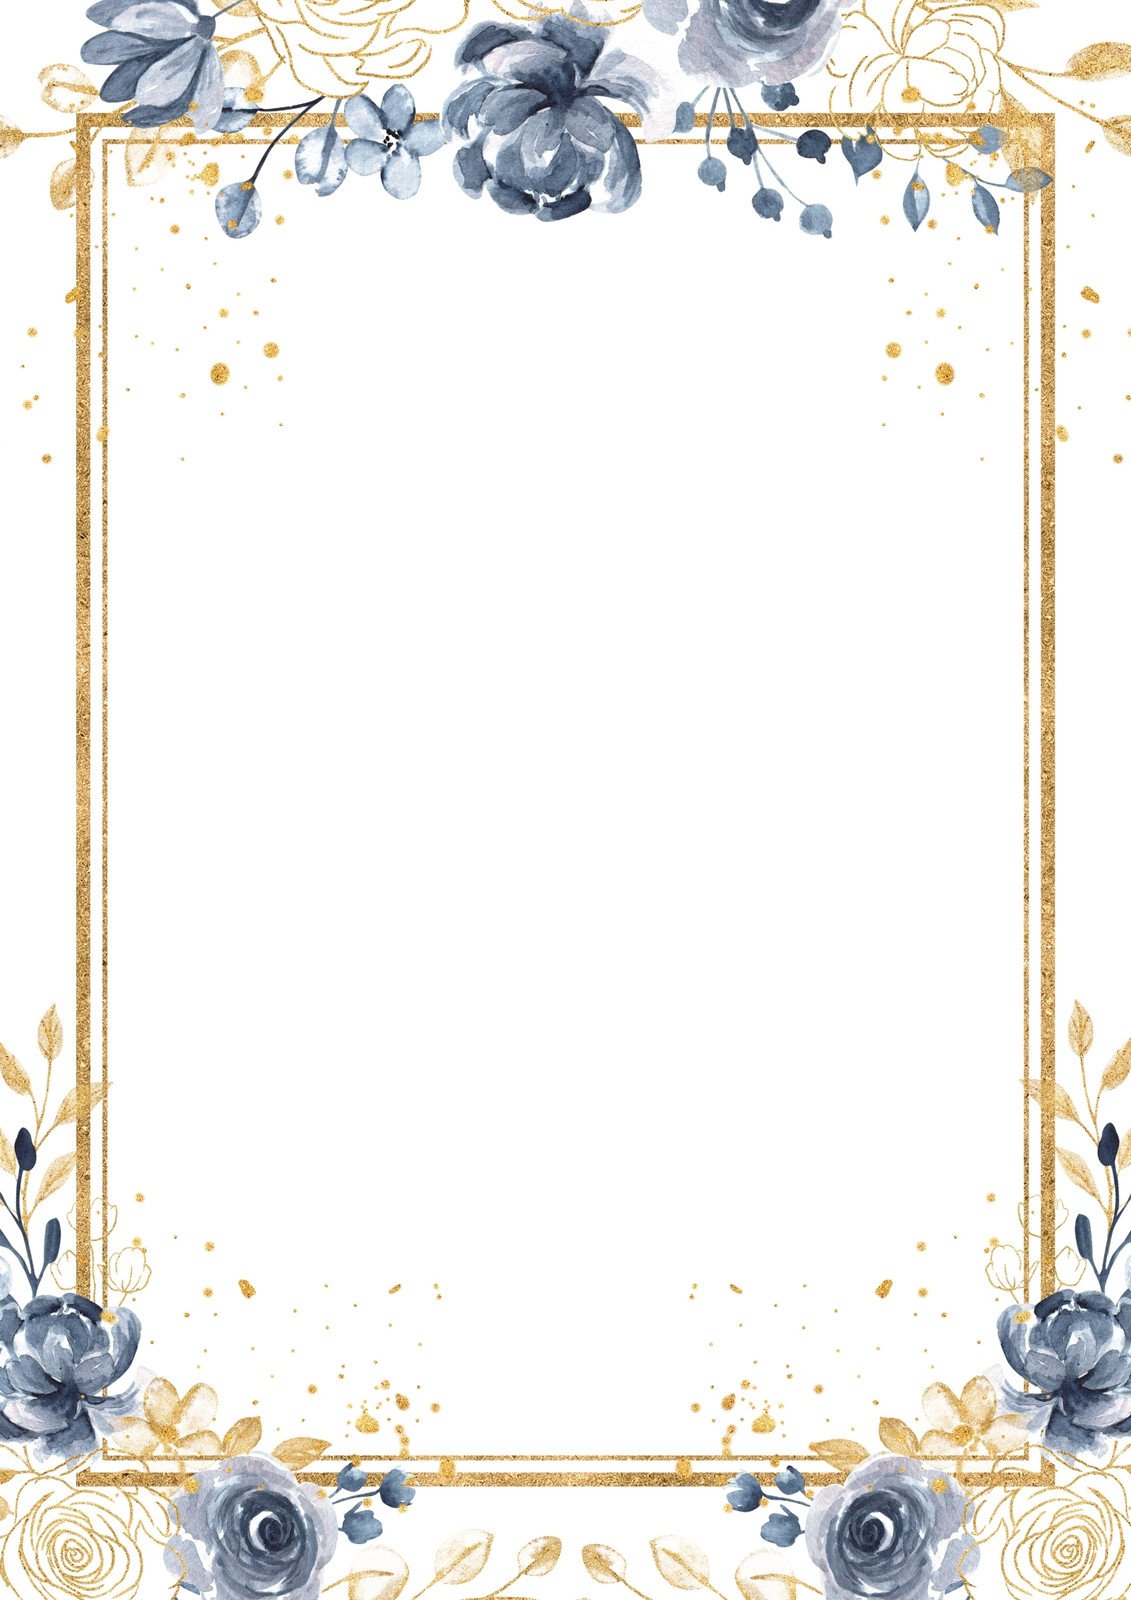 https://marketplace.canva.com/EAFD3110XSM/1/0/1131w/canva-white-gold-elegant-floral-a4-page-border-Vx2vXXKMEUw.jpg